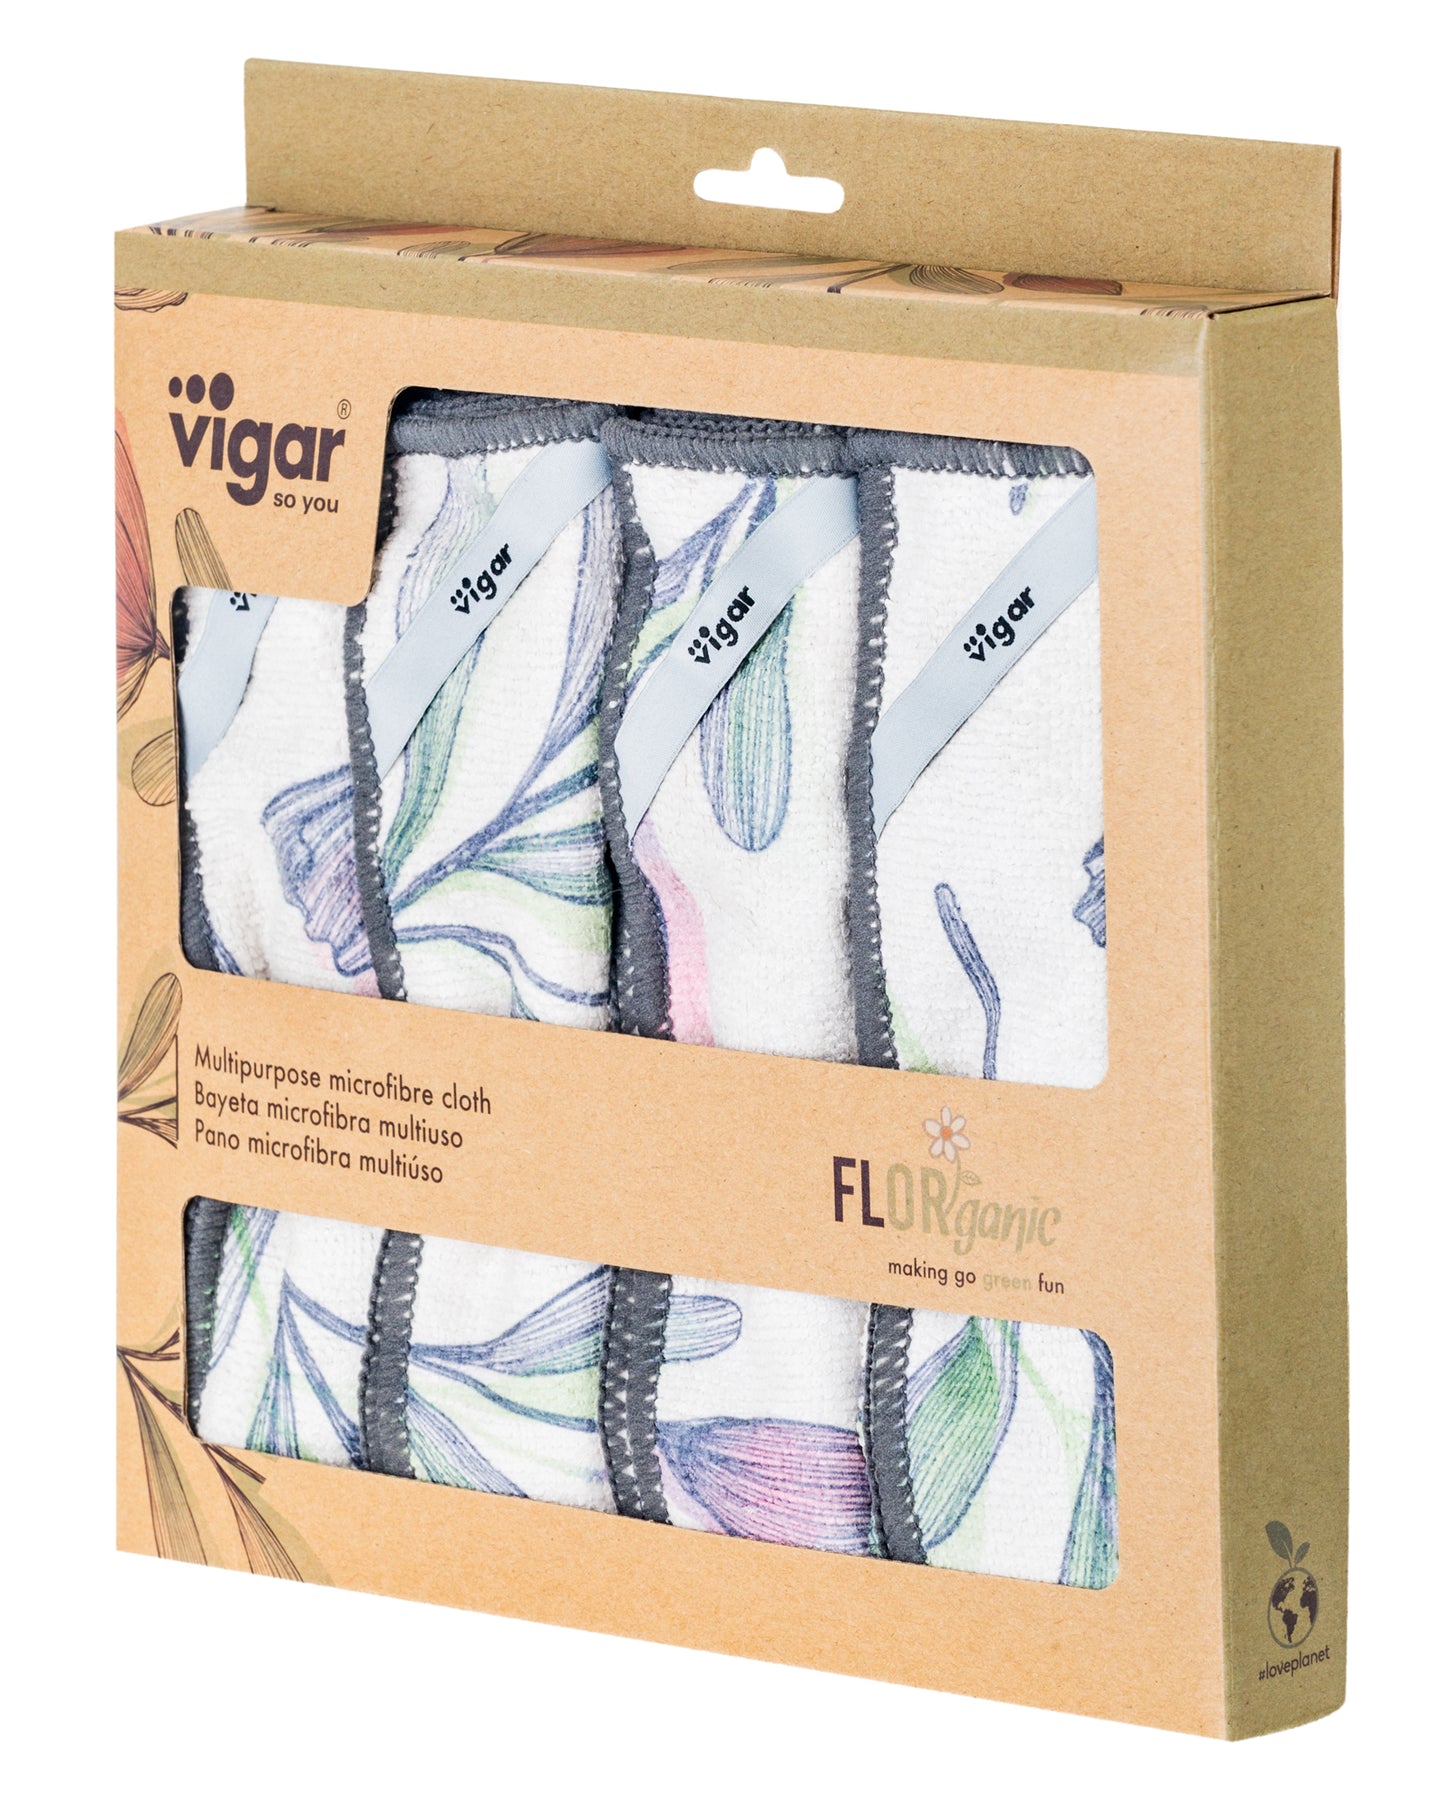 Vigar Florganic Microfibre Cloth 4pc